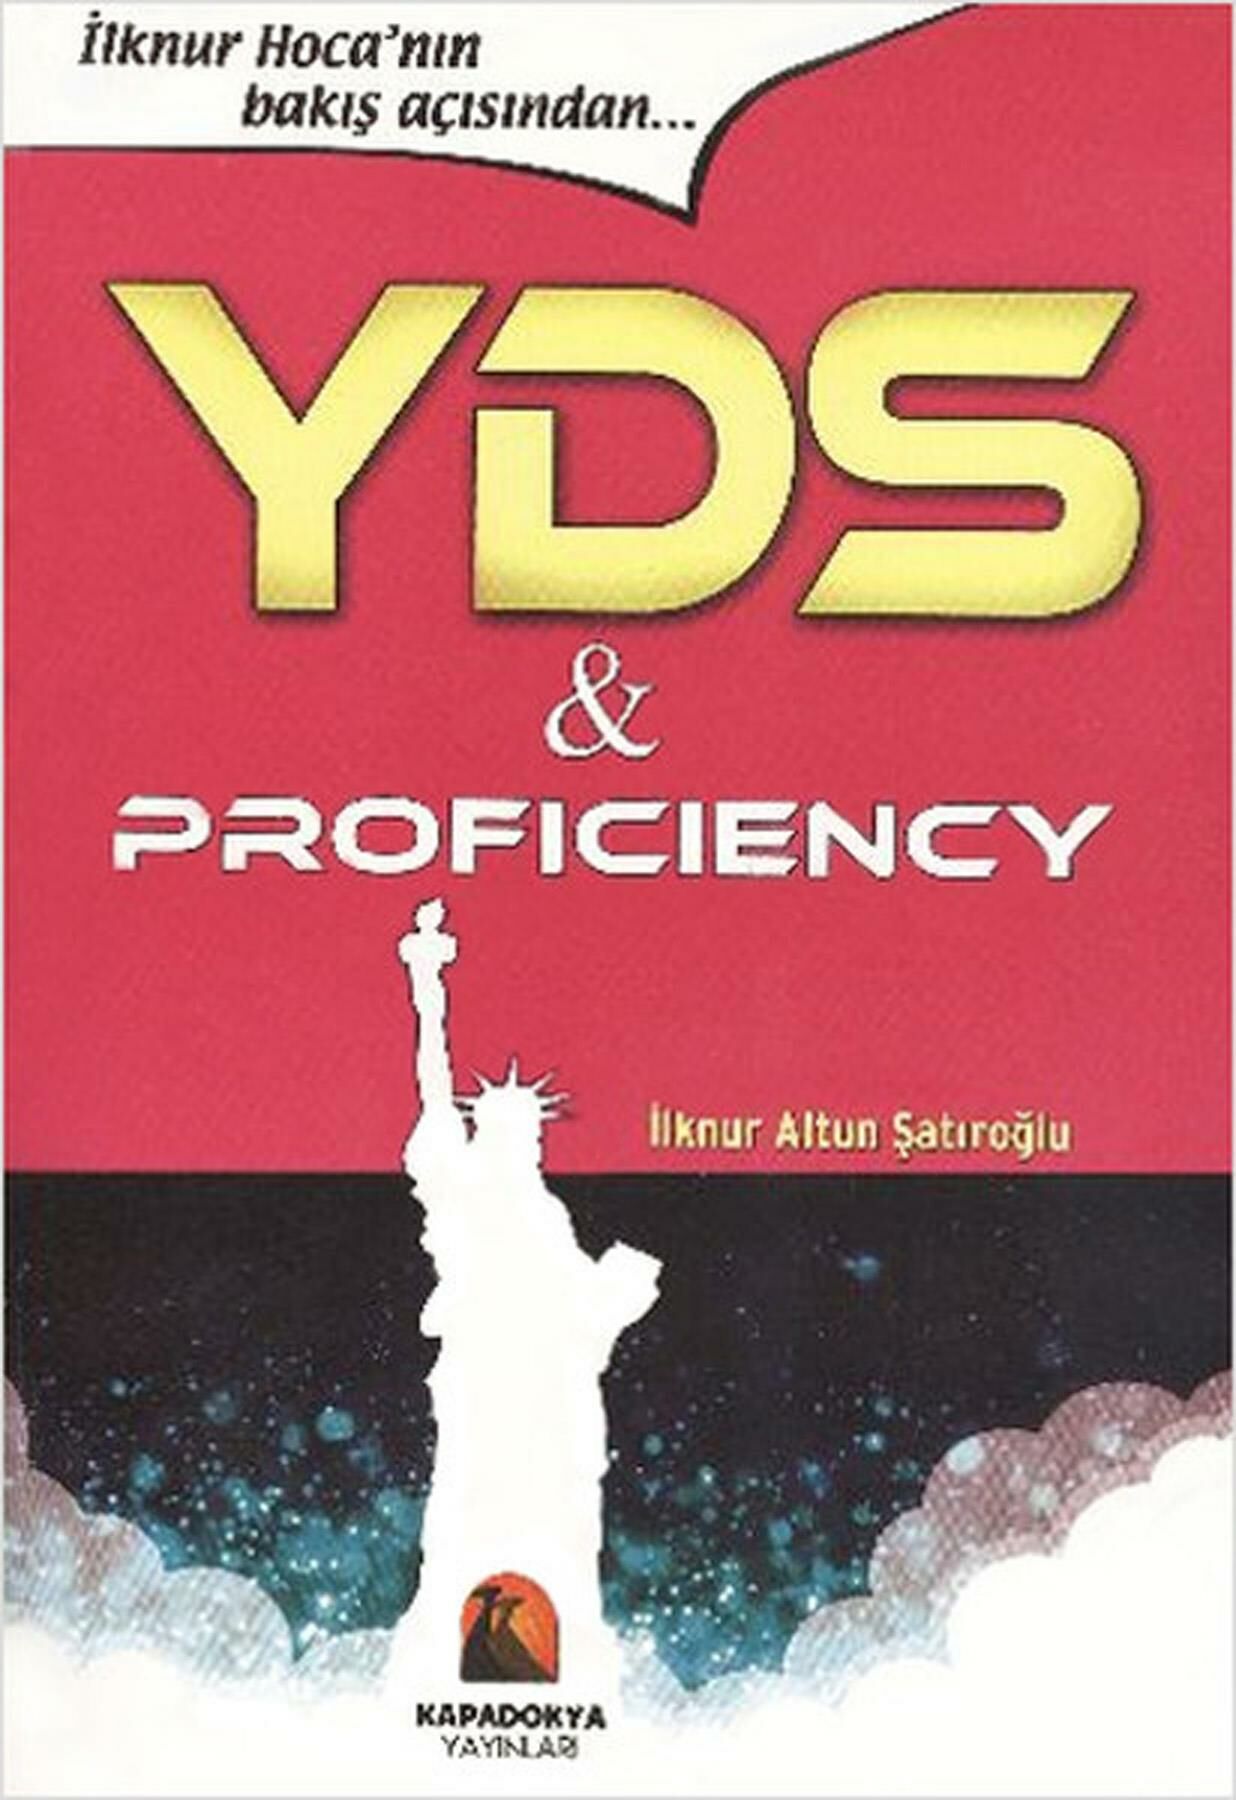 Kapadokya YDS Proficiency